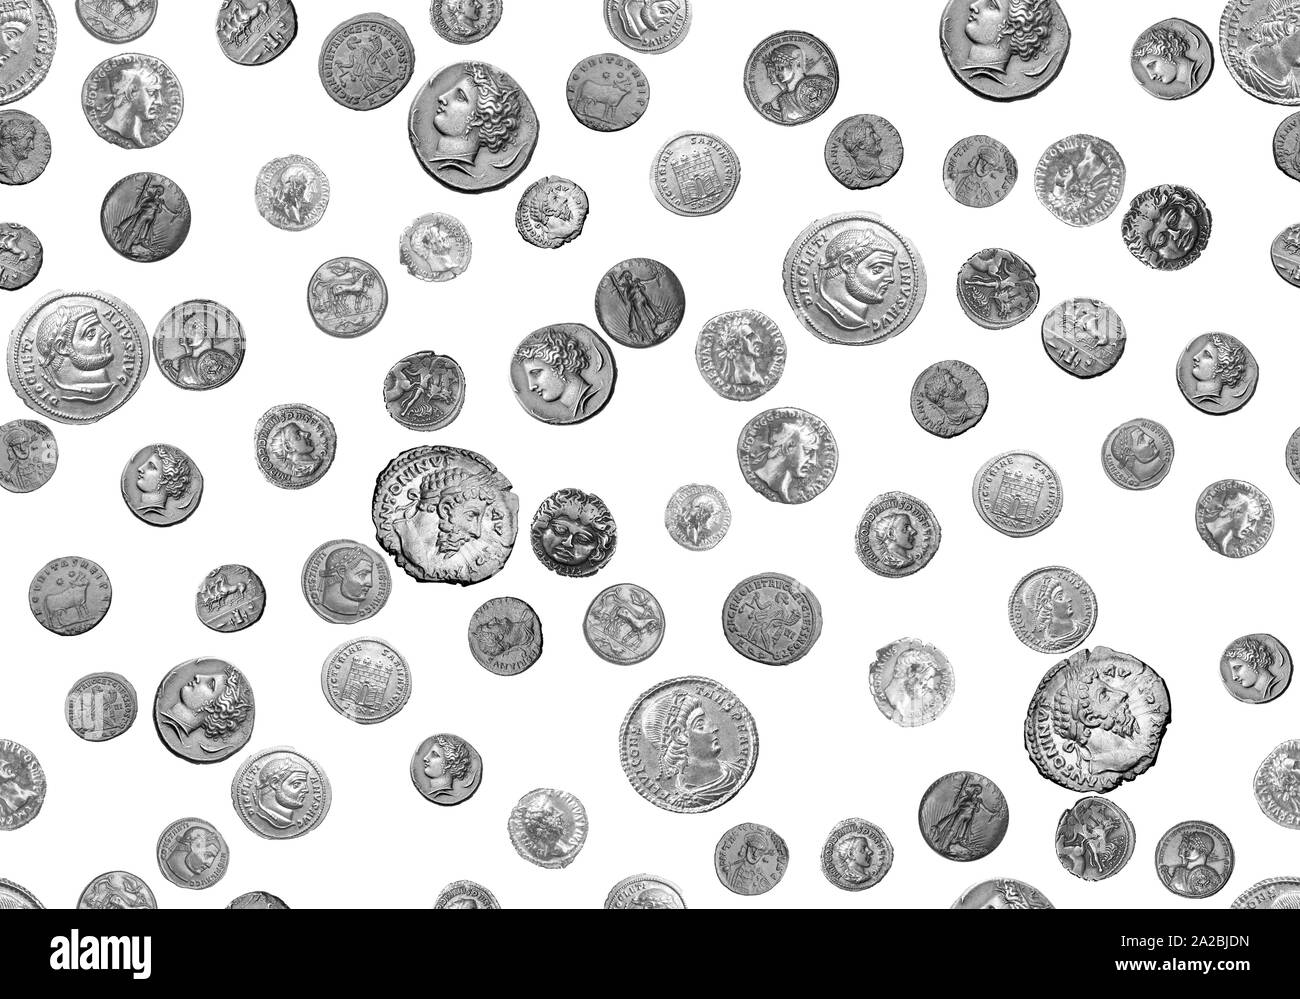 Monedas antiguas patrón sin fisuras con fondo negro para impresión textil. Foto de stock